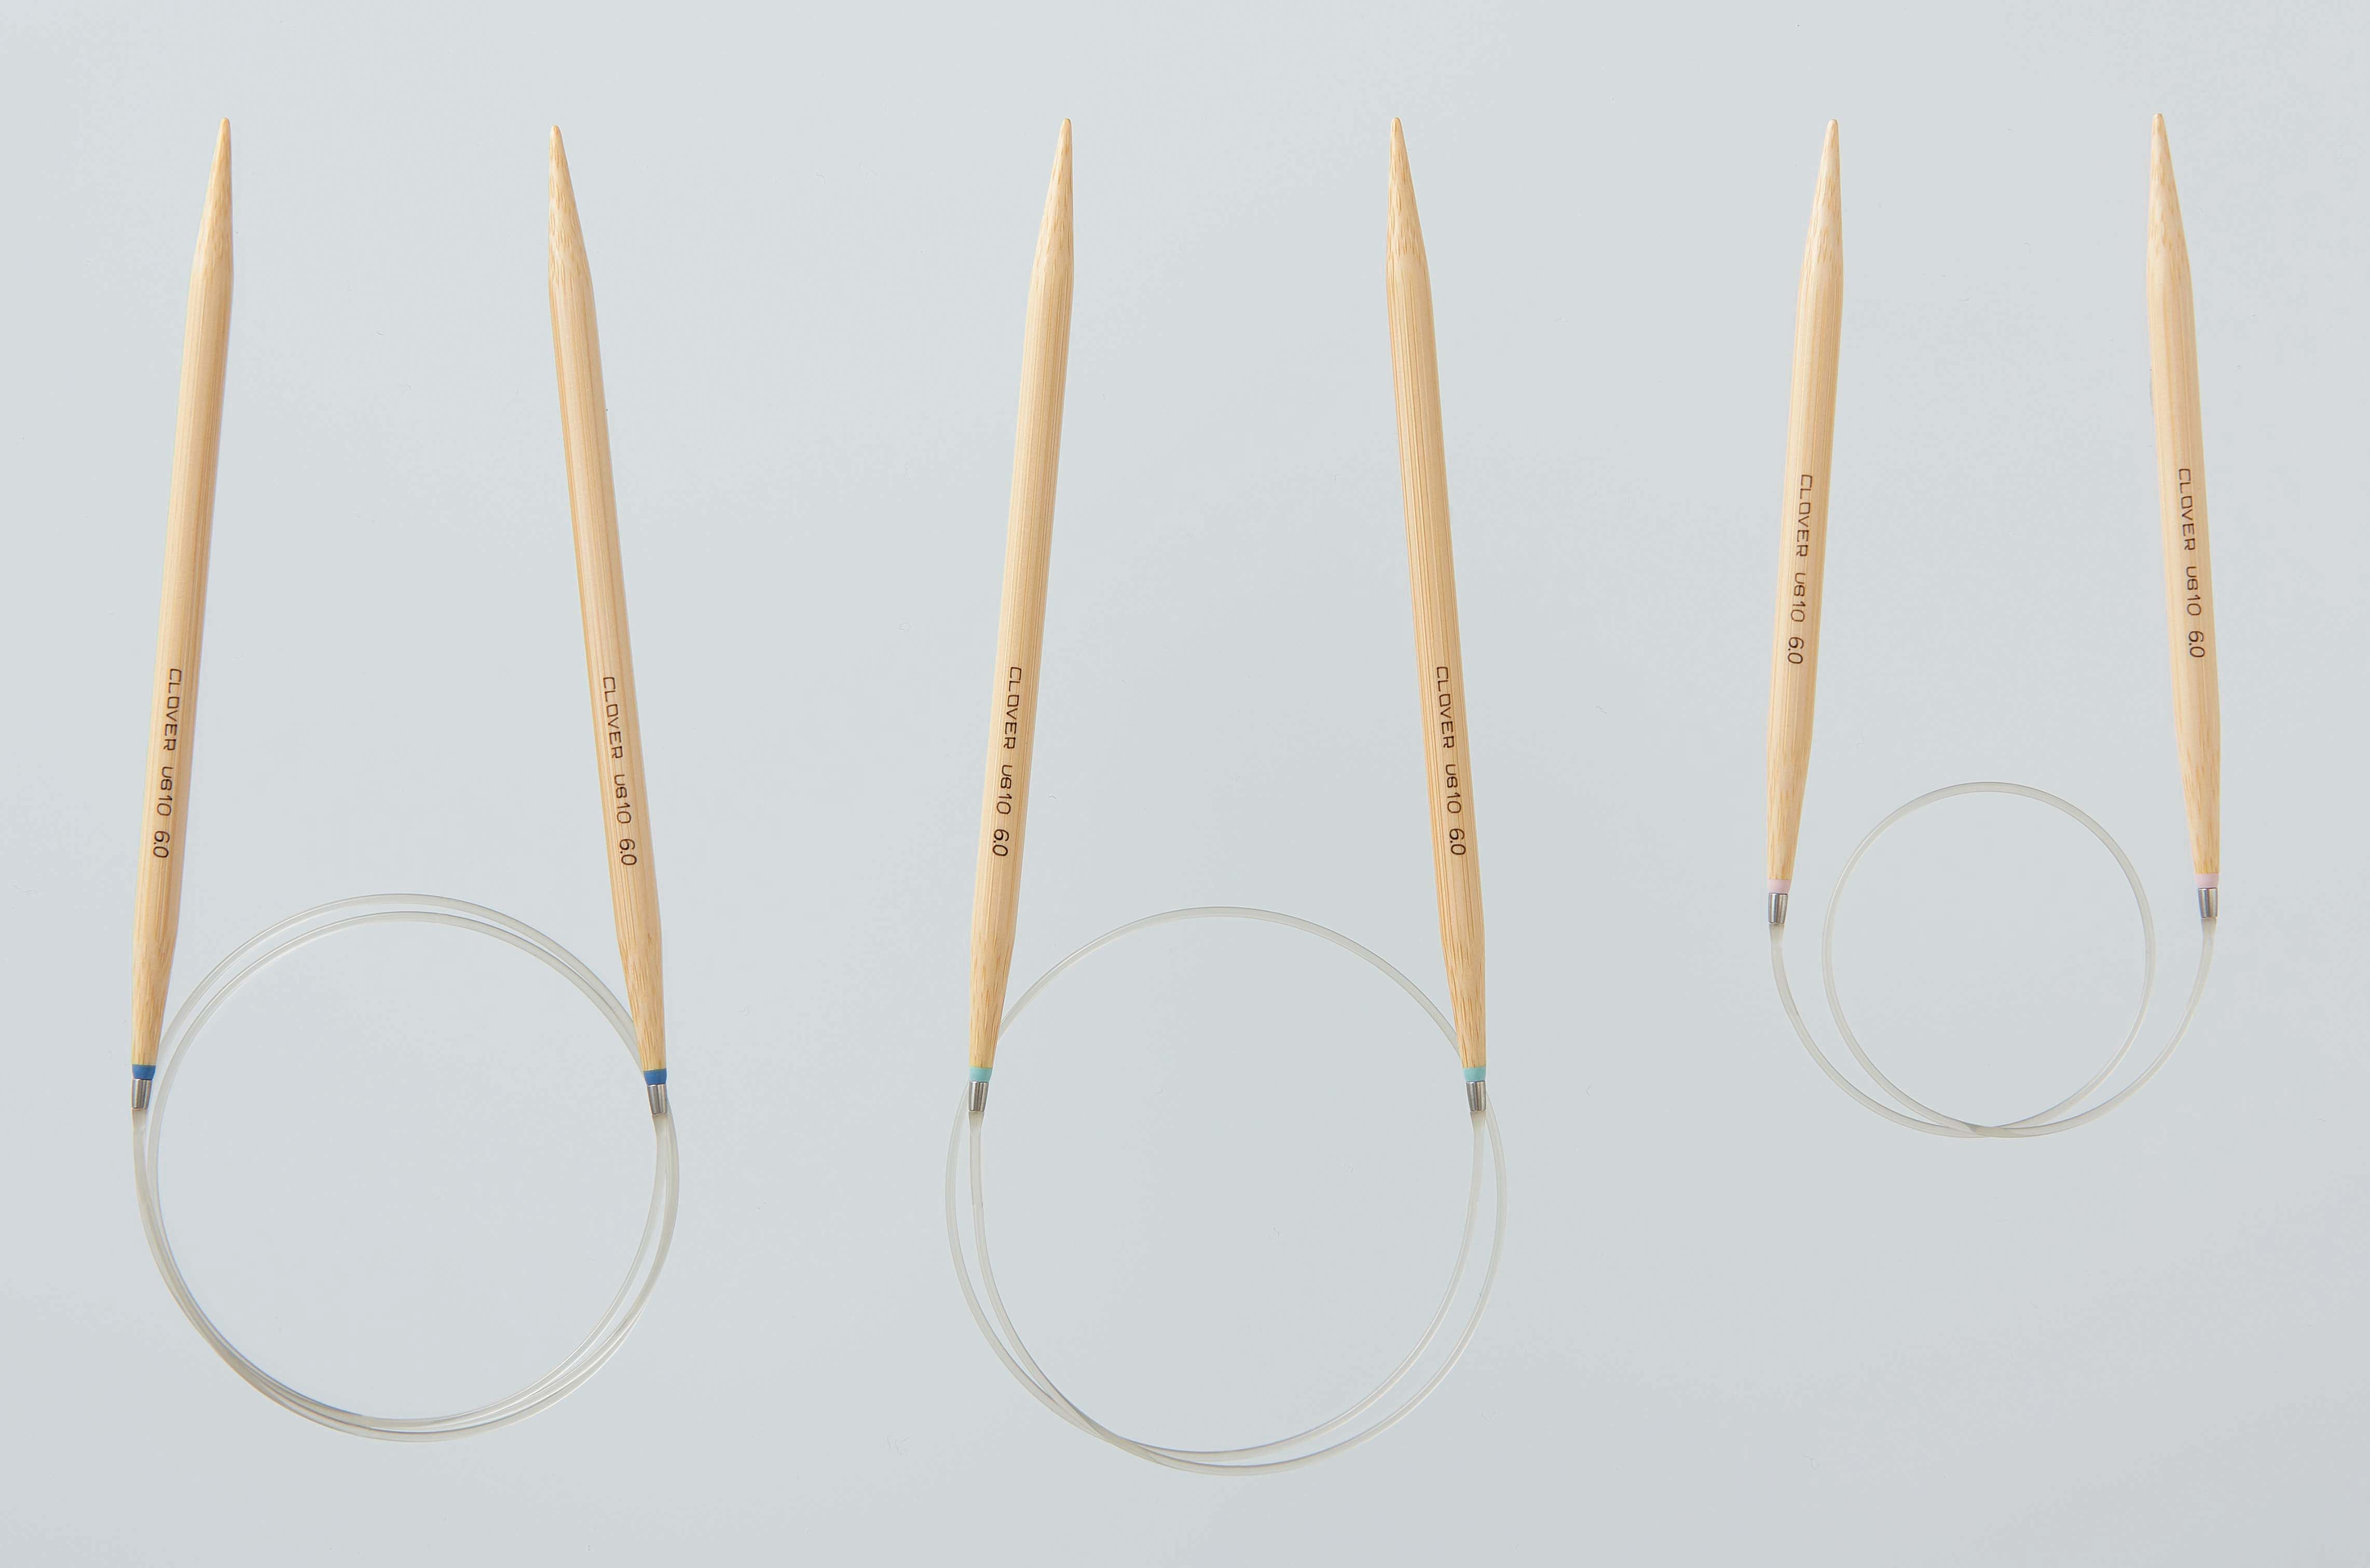 ChiaoGoo Bamboo Circular Knitting Needles 32, Size 4/3.5mm